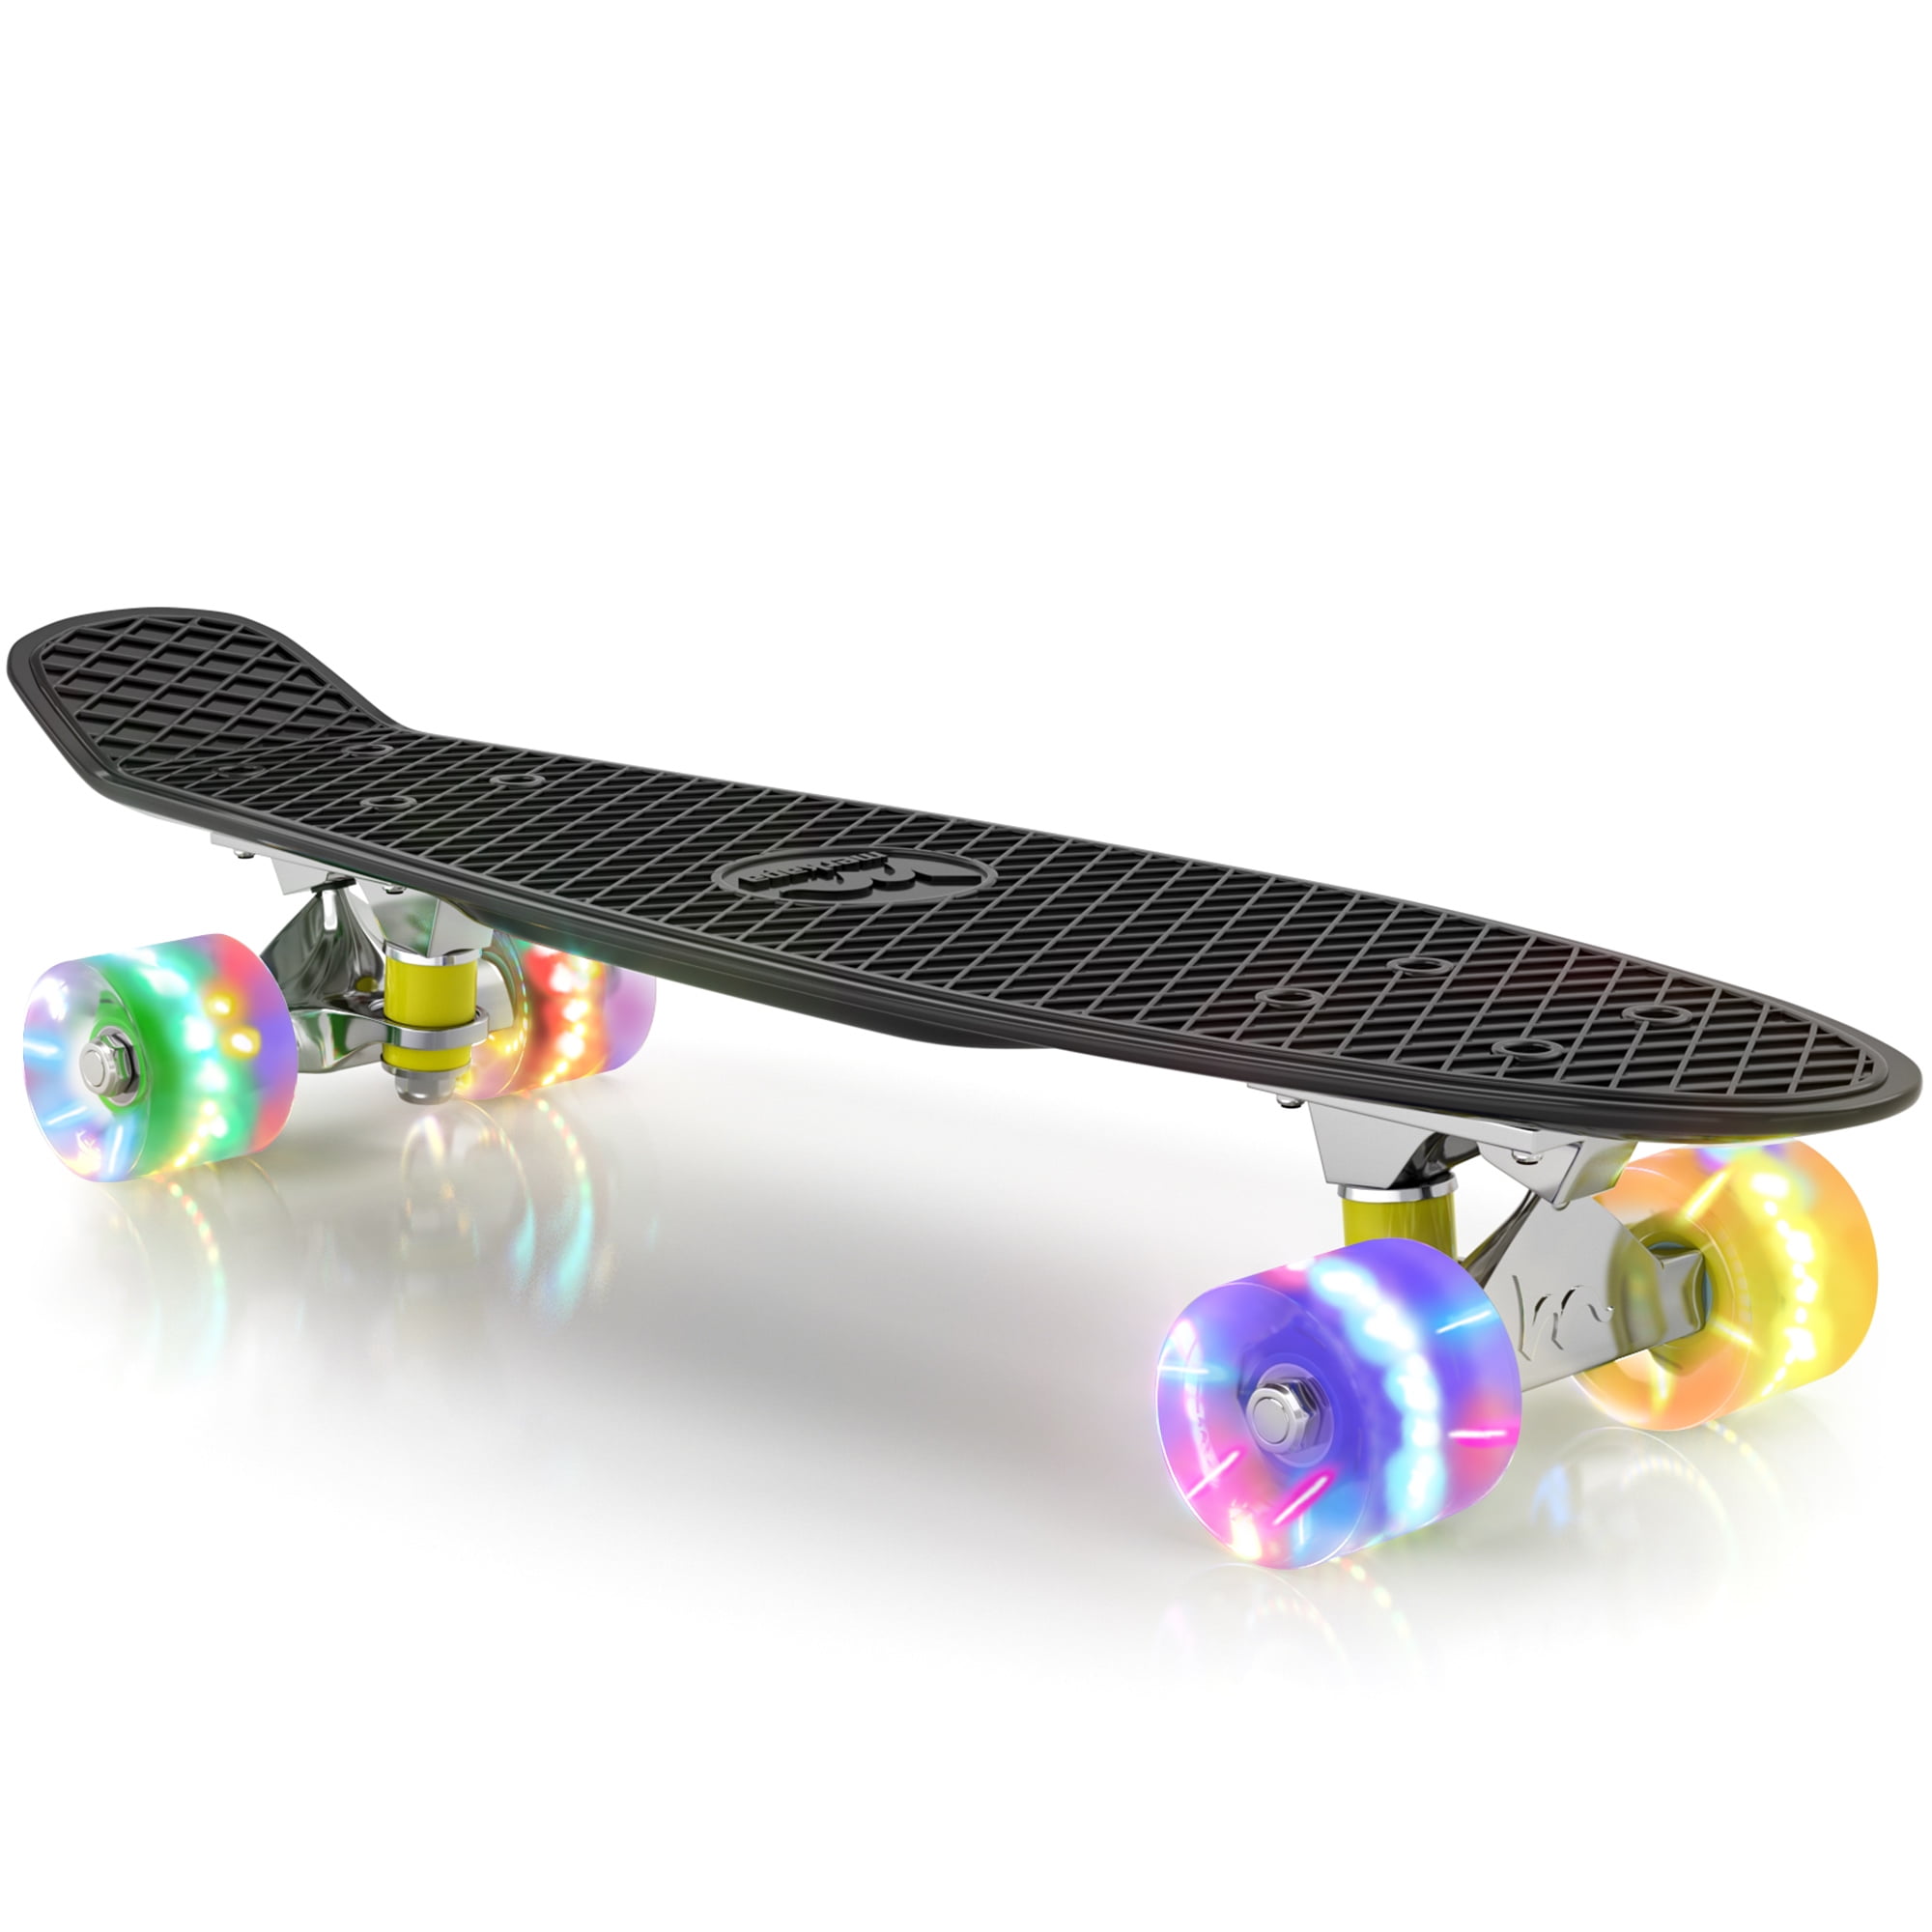 Plastic Mini Cruiser Complete Skateboards for Beginners/Boys/Girls/Youth/Adults YF YOUFU 22 Inch Skateboard 